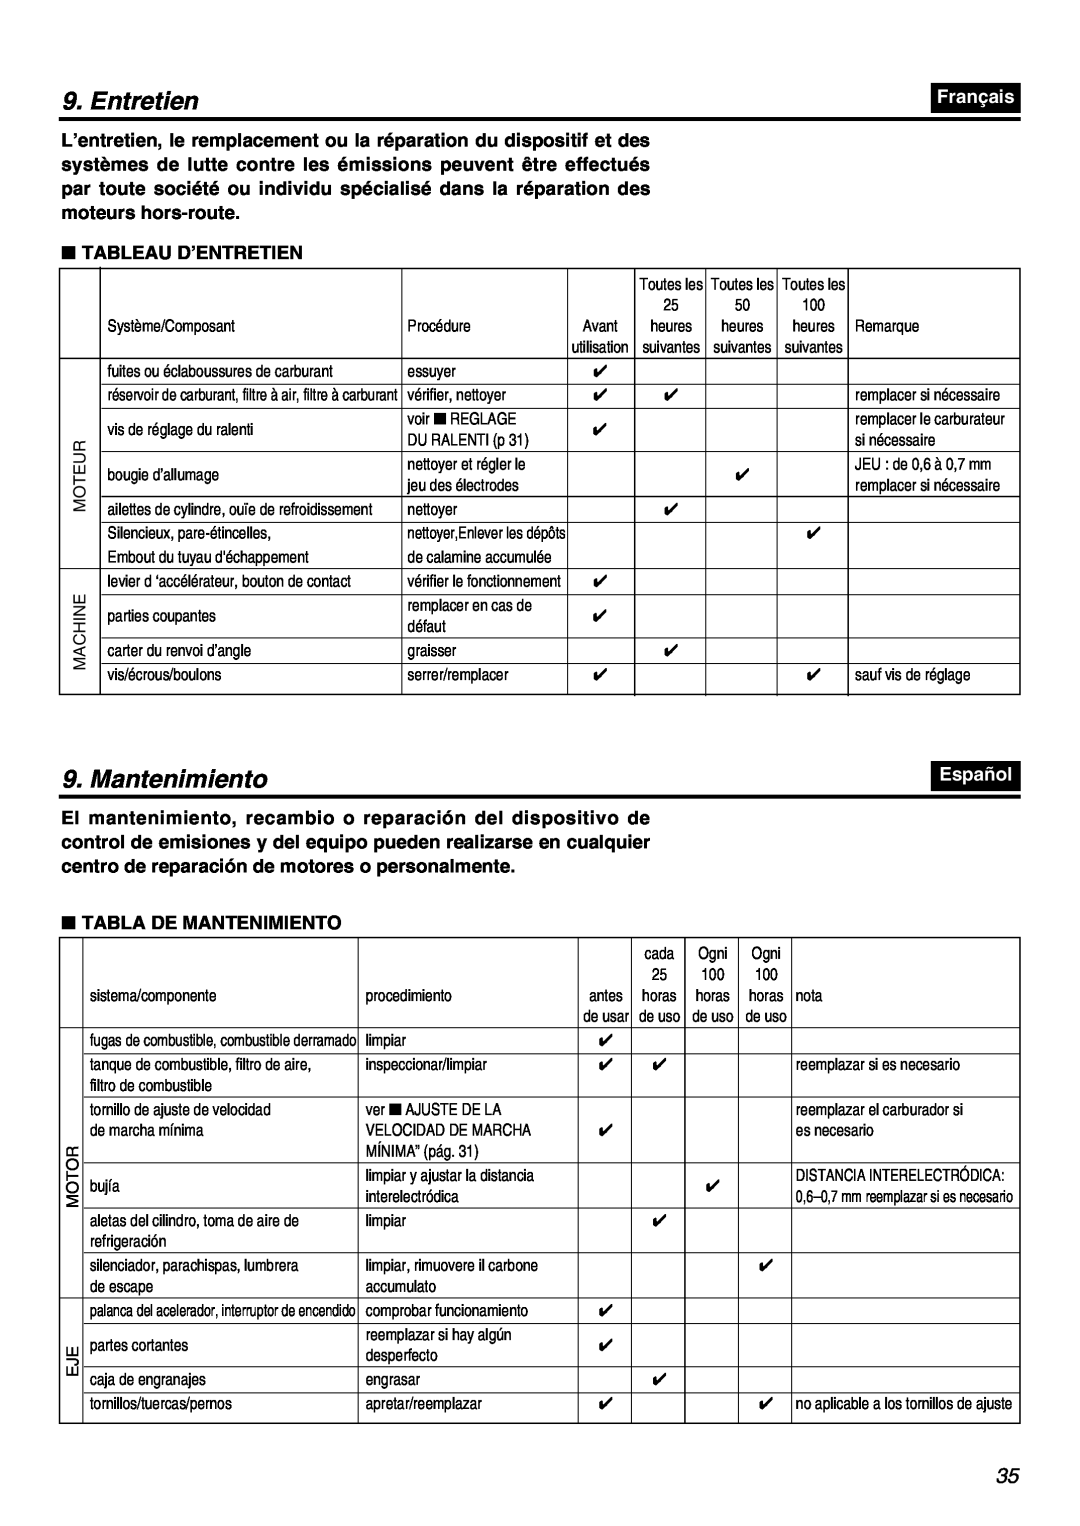 Univex SRTZ2401-CA manual Français, Tableau D’Entretien, Español, Tabla De Mantenimiento 